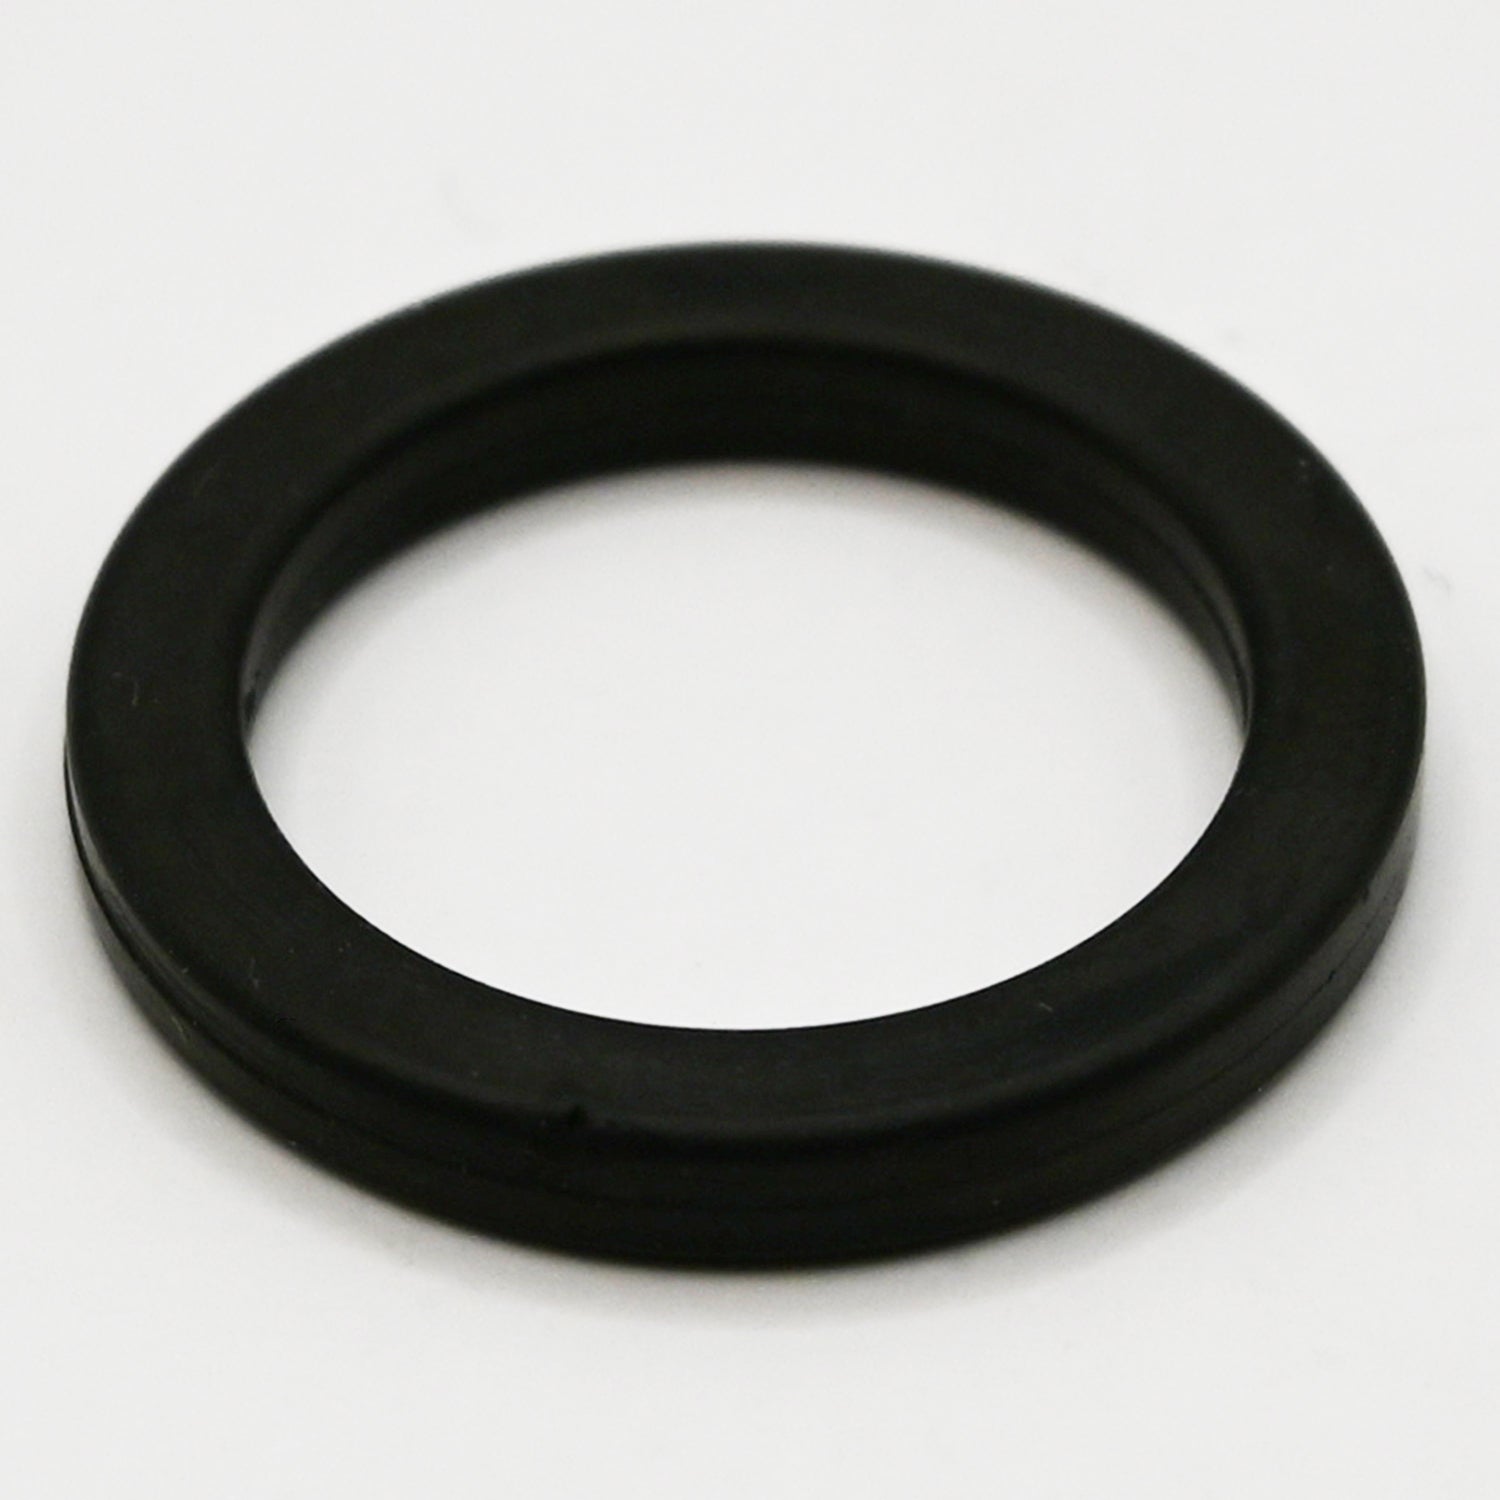 Black rubber O-ring on white background.